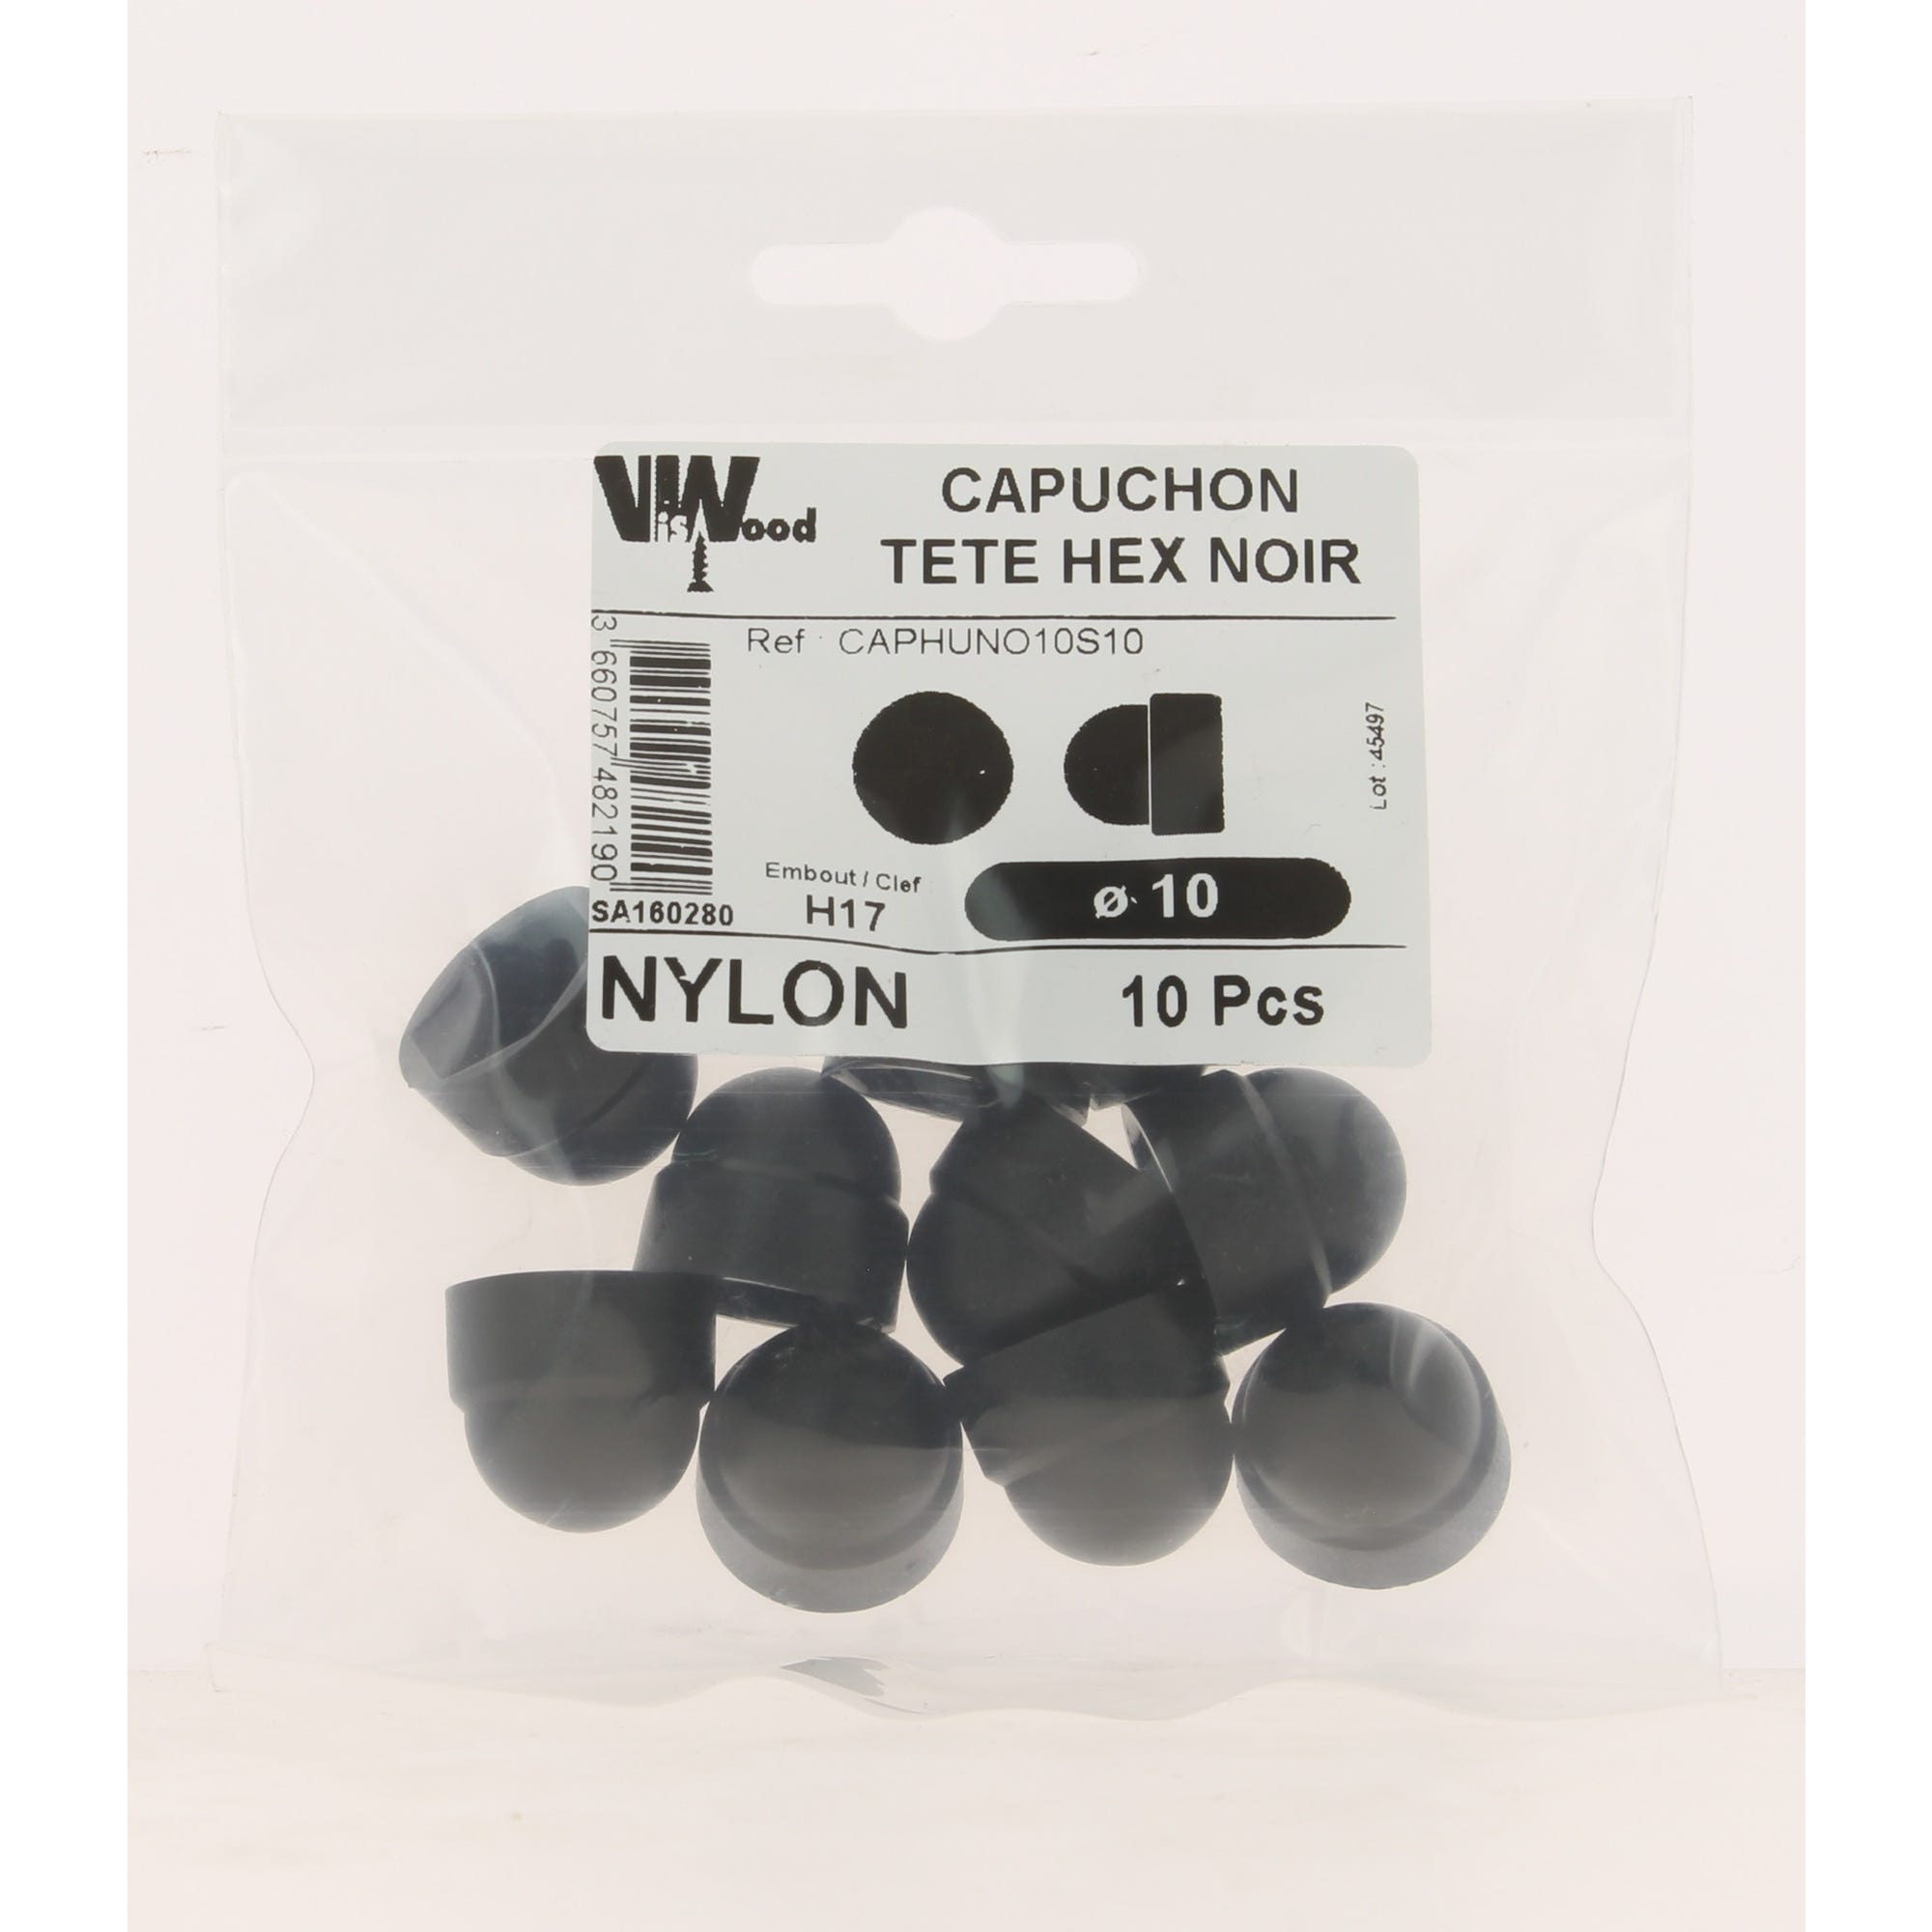 Cache ecrou hexa nylon noir m10 x10 - VISWOOD 0